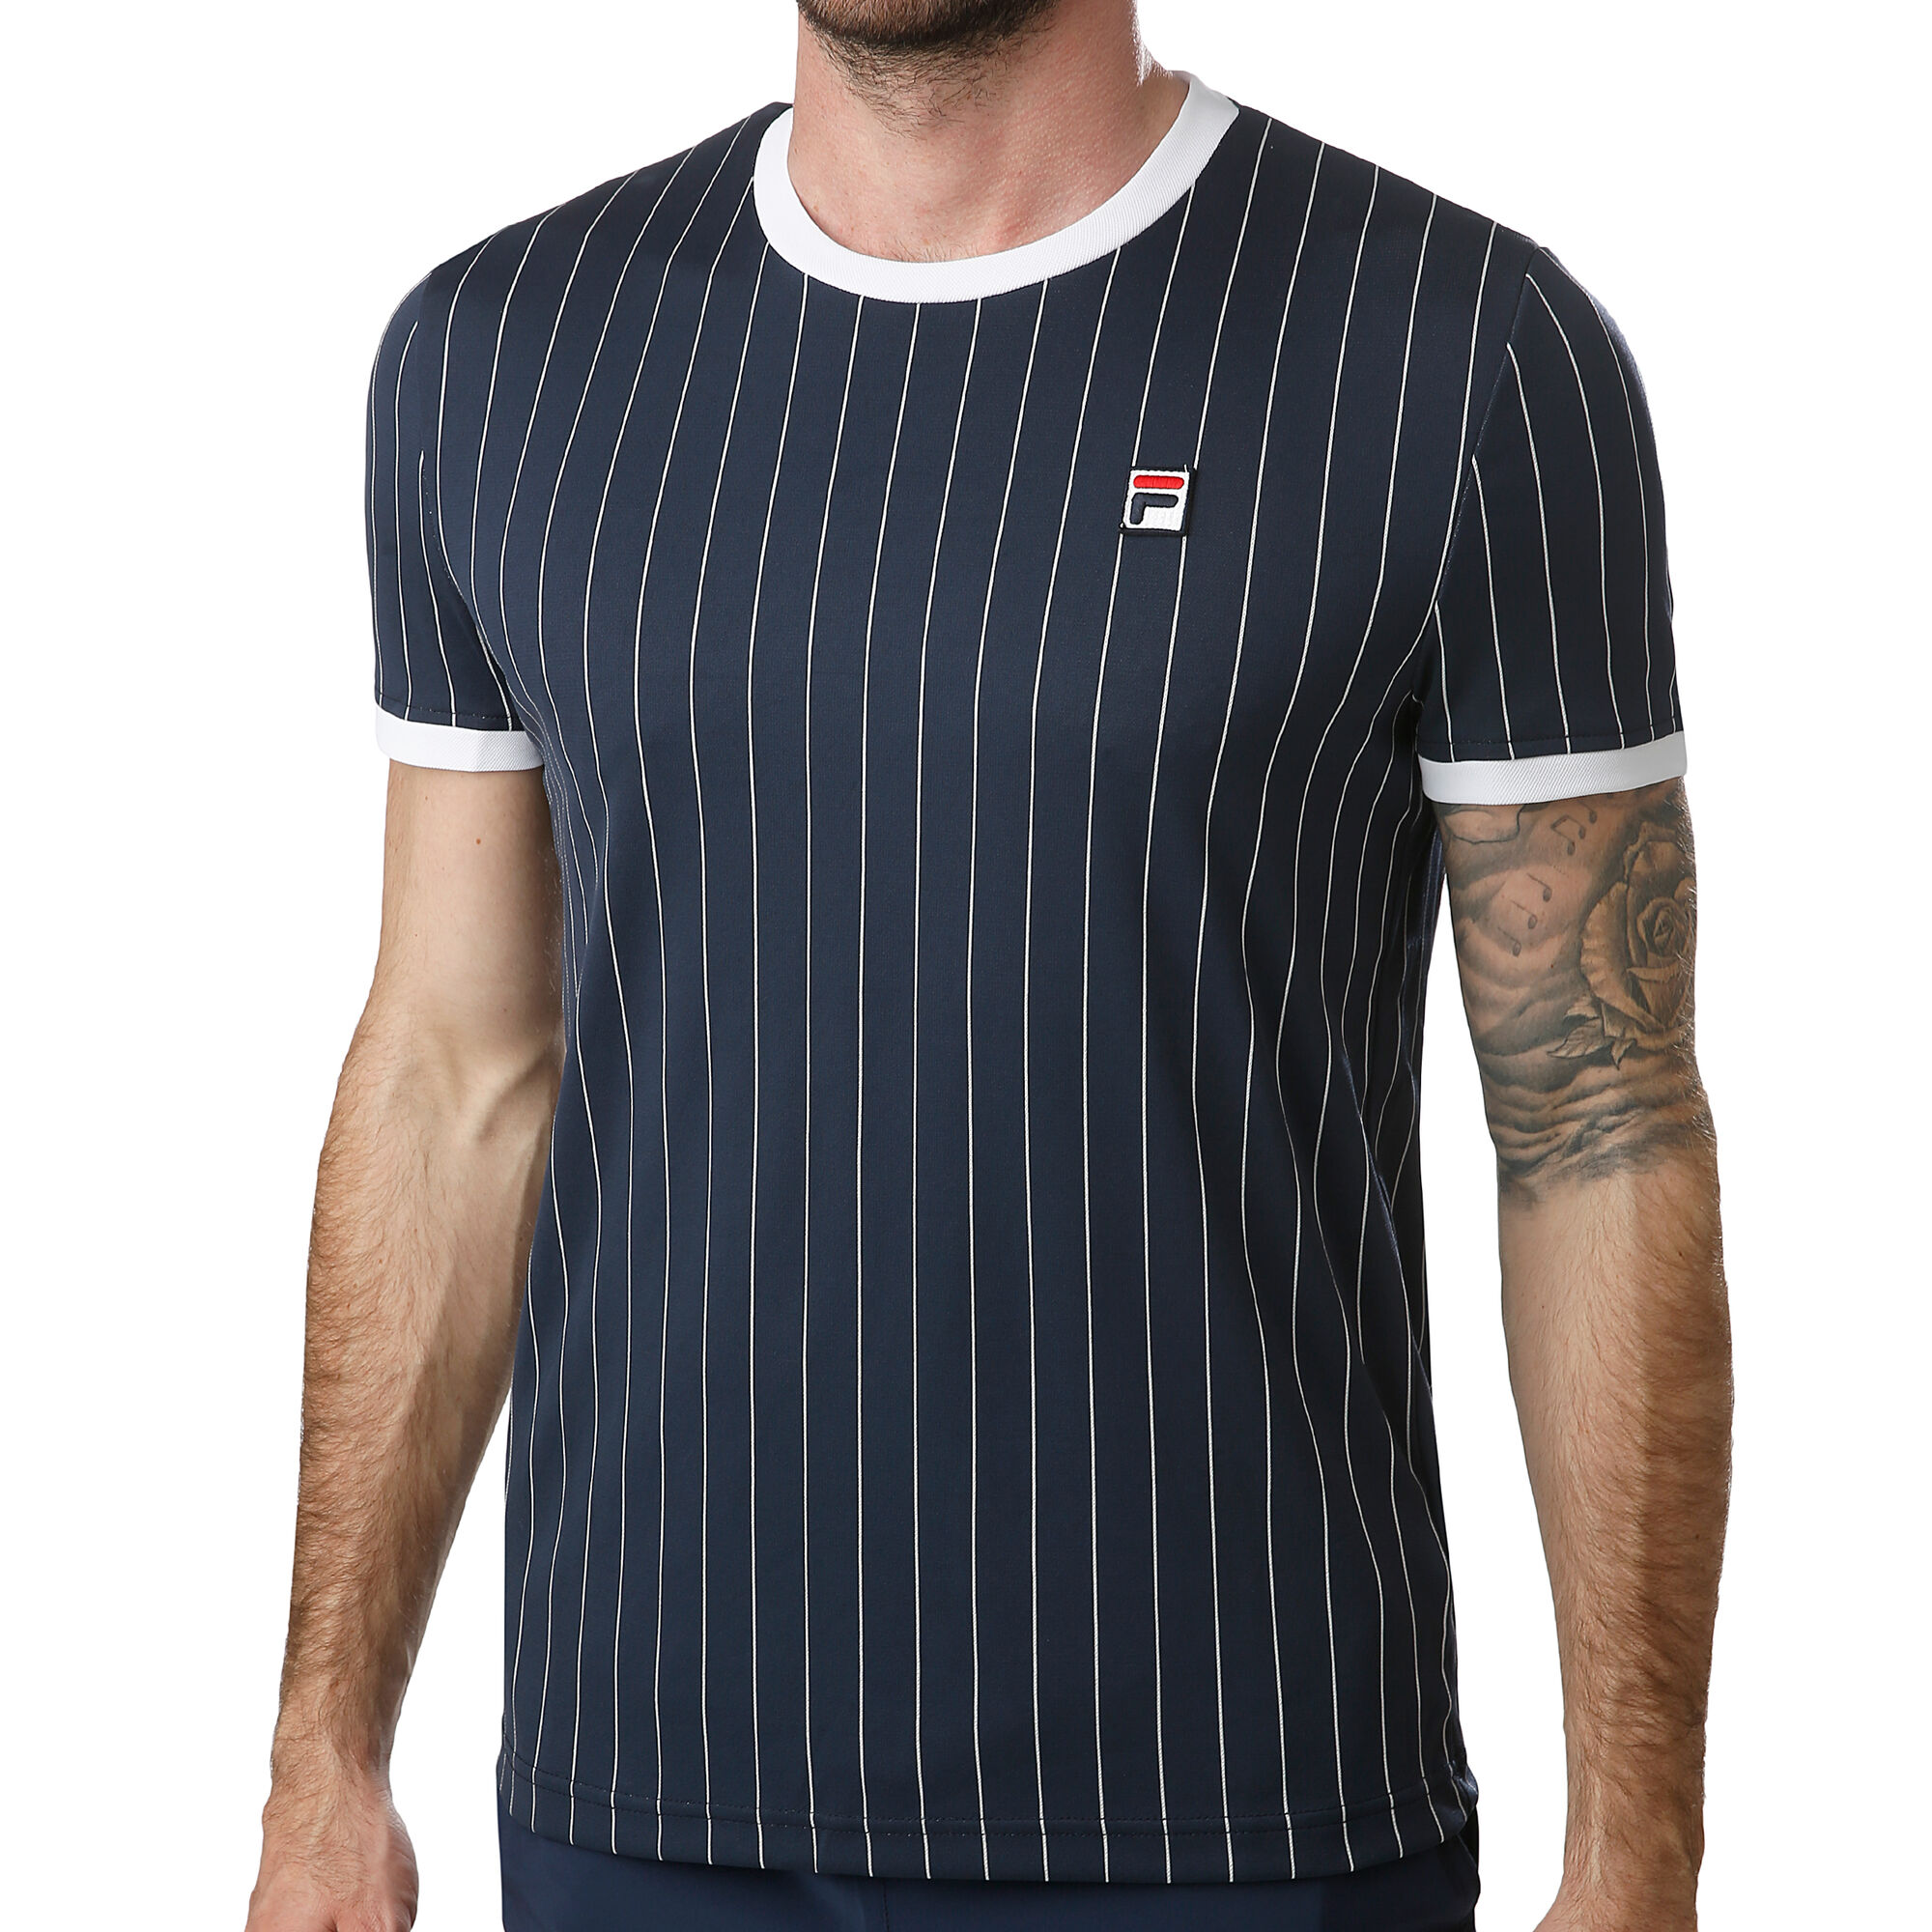 buy Stripes T-Shirt Men - Dark Blue, White online | Tennis-Point